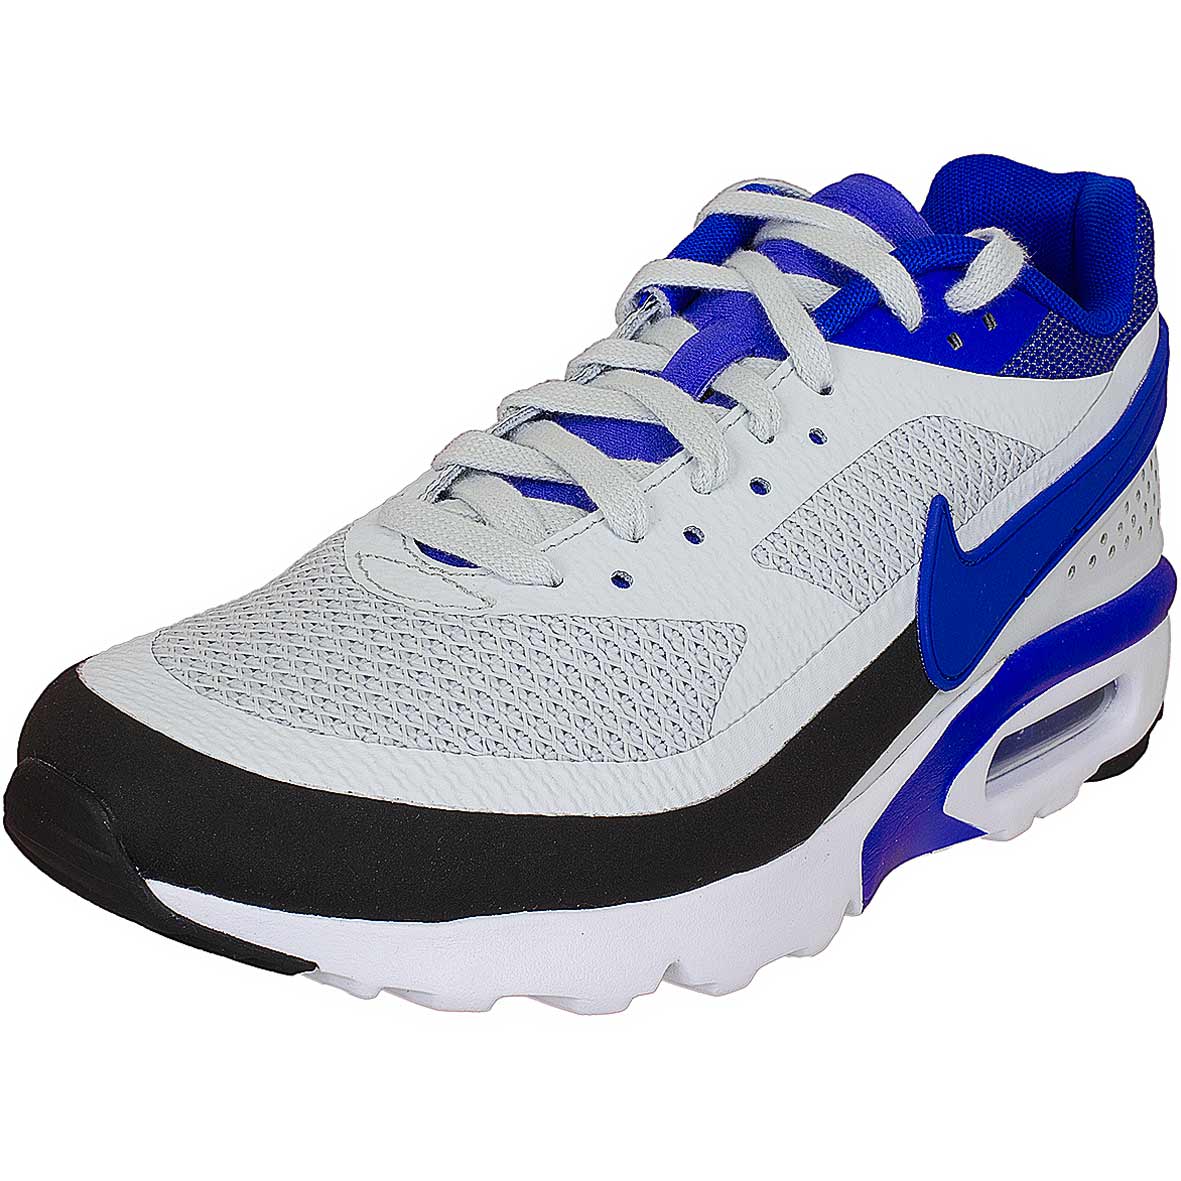 ☆ Nike Sneaker Air Max BW Ultra SE grau/blau - hier bestellen!